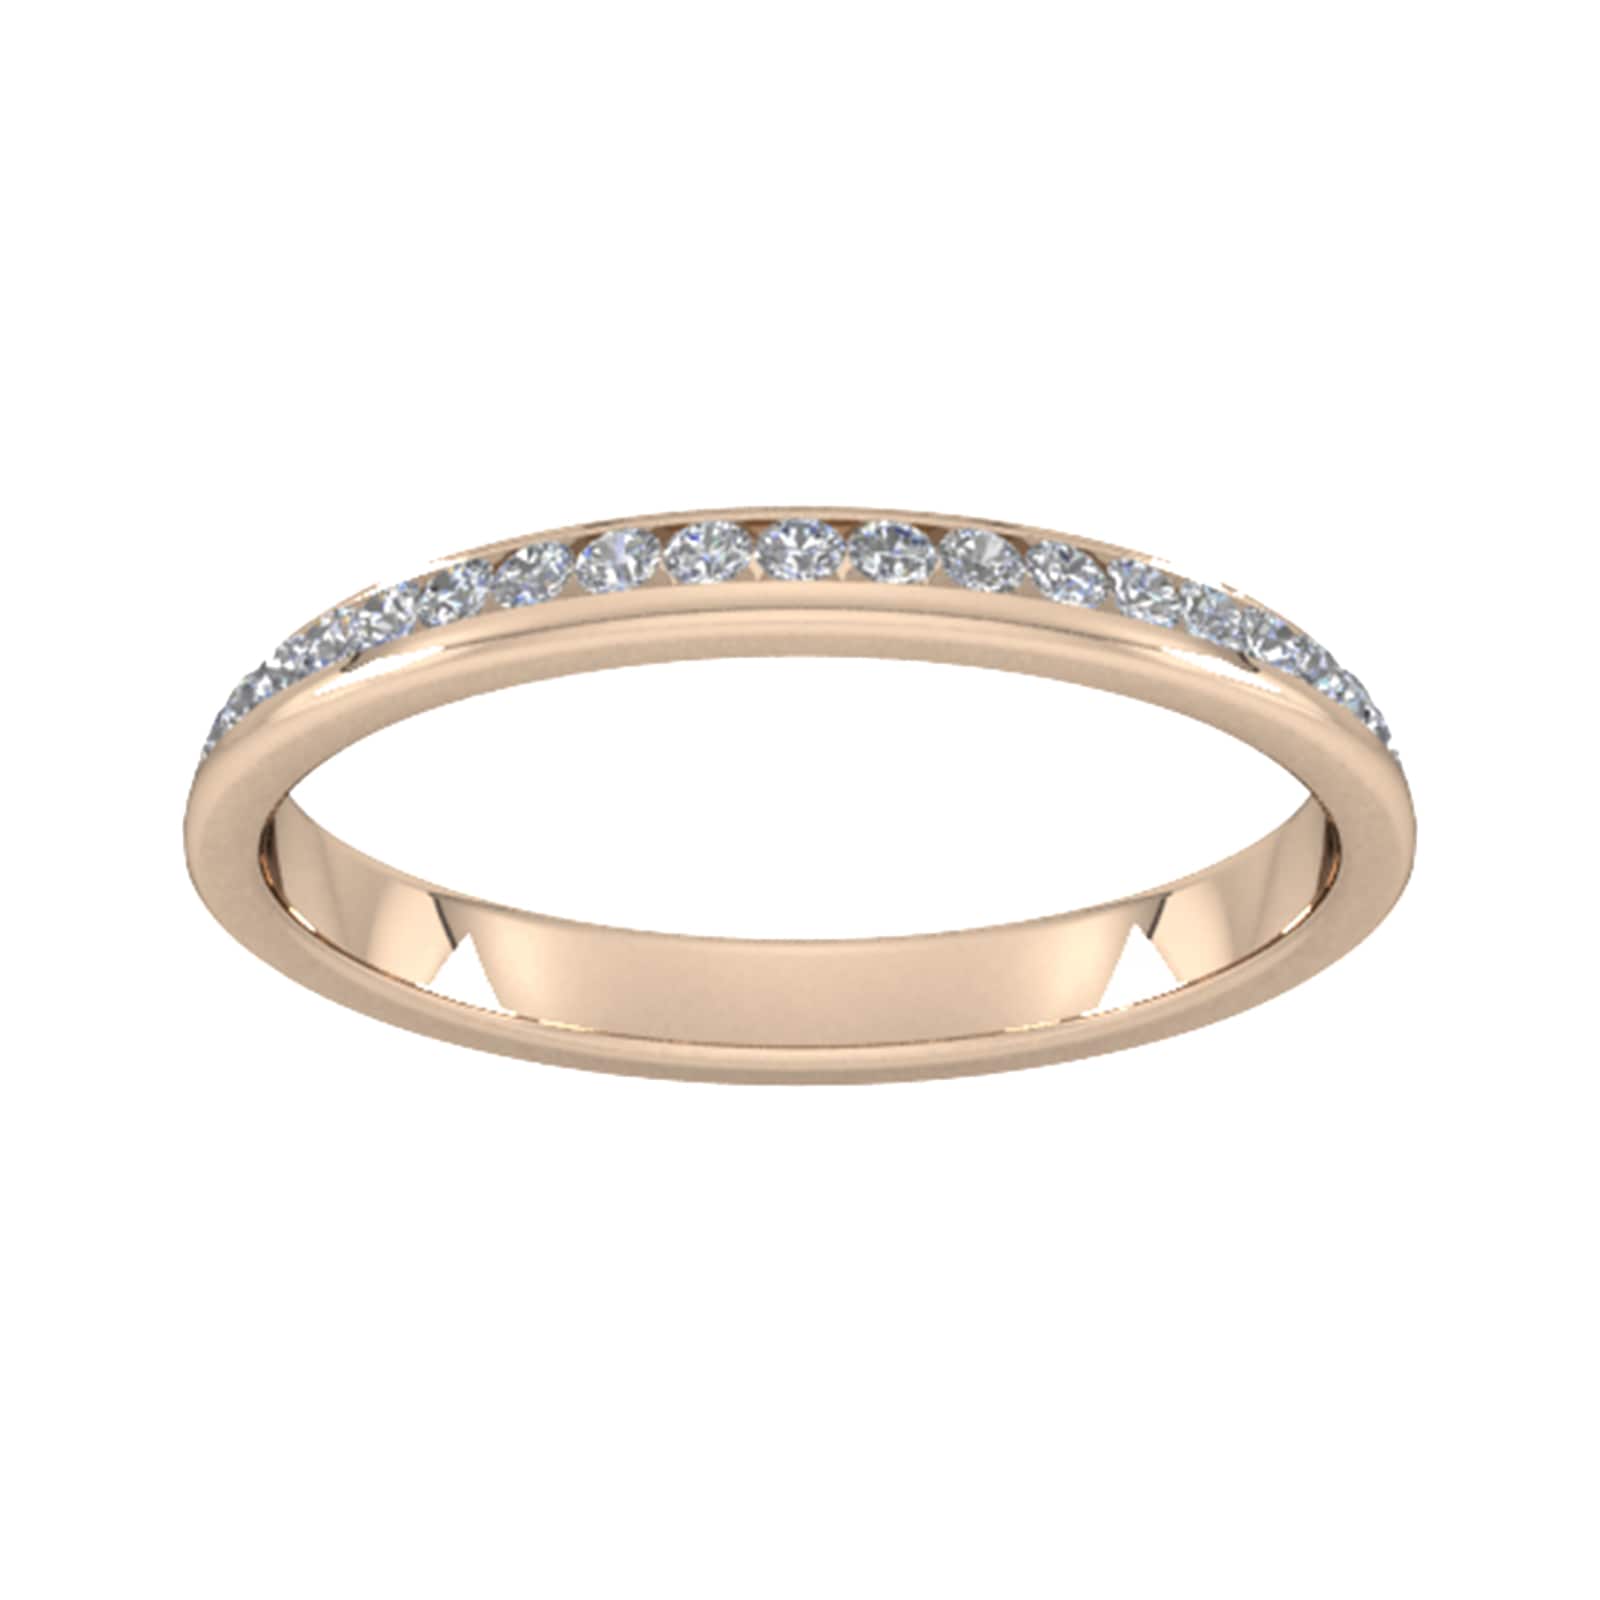 0.42 Carat Total Weight Brilliant Cut Full Diamond Set Pyramid Style Wedding Ring In 18 Carat Rose Gold - Ring Size J